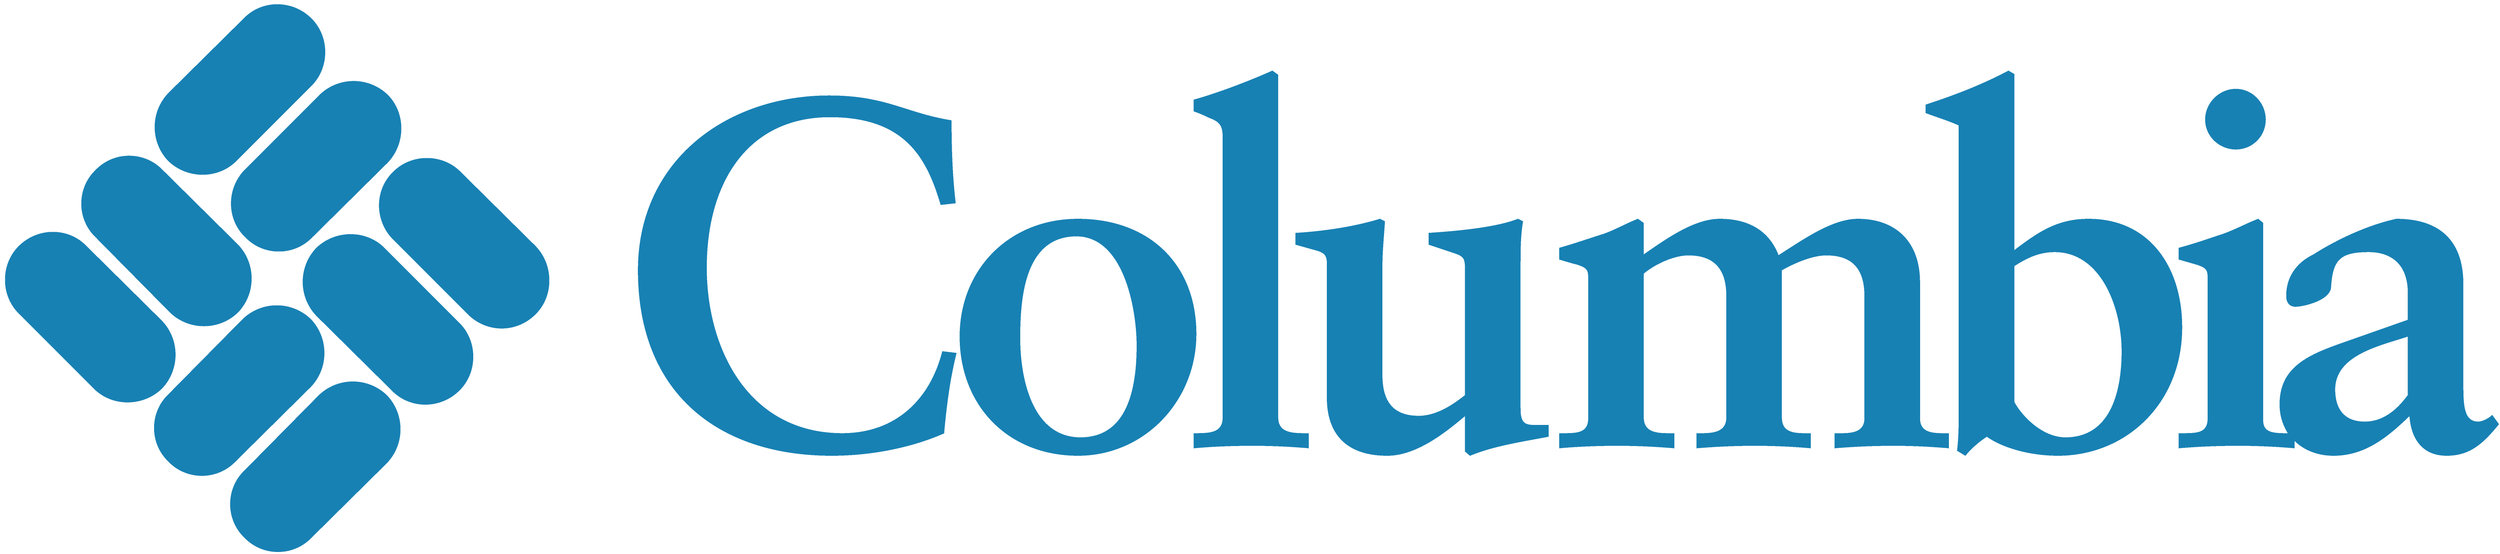 columbia-logo-brand.jpg